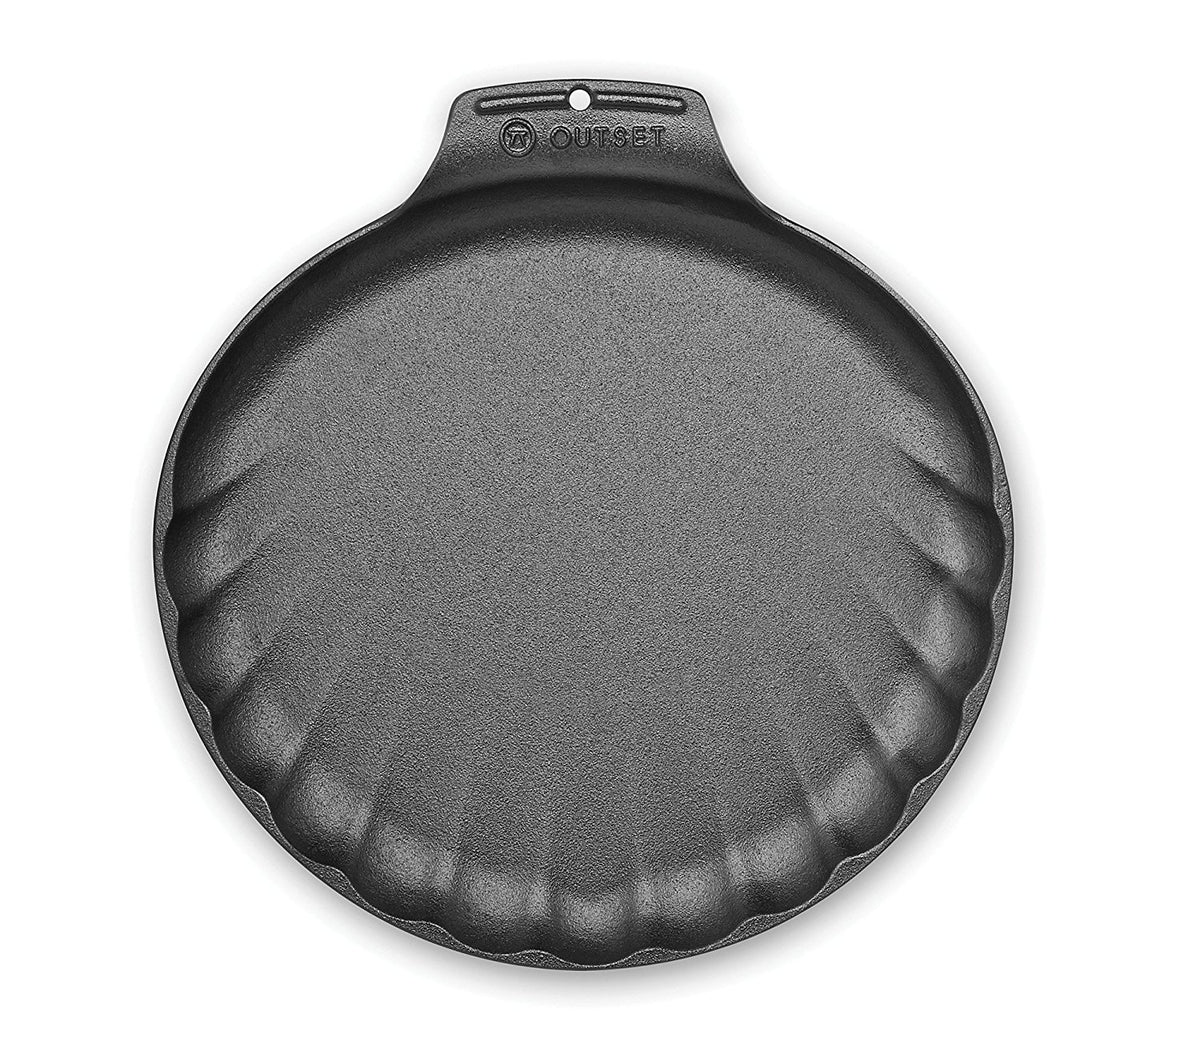 Outset Cast Iron Scallop Serving Pan